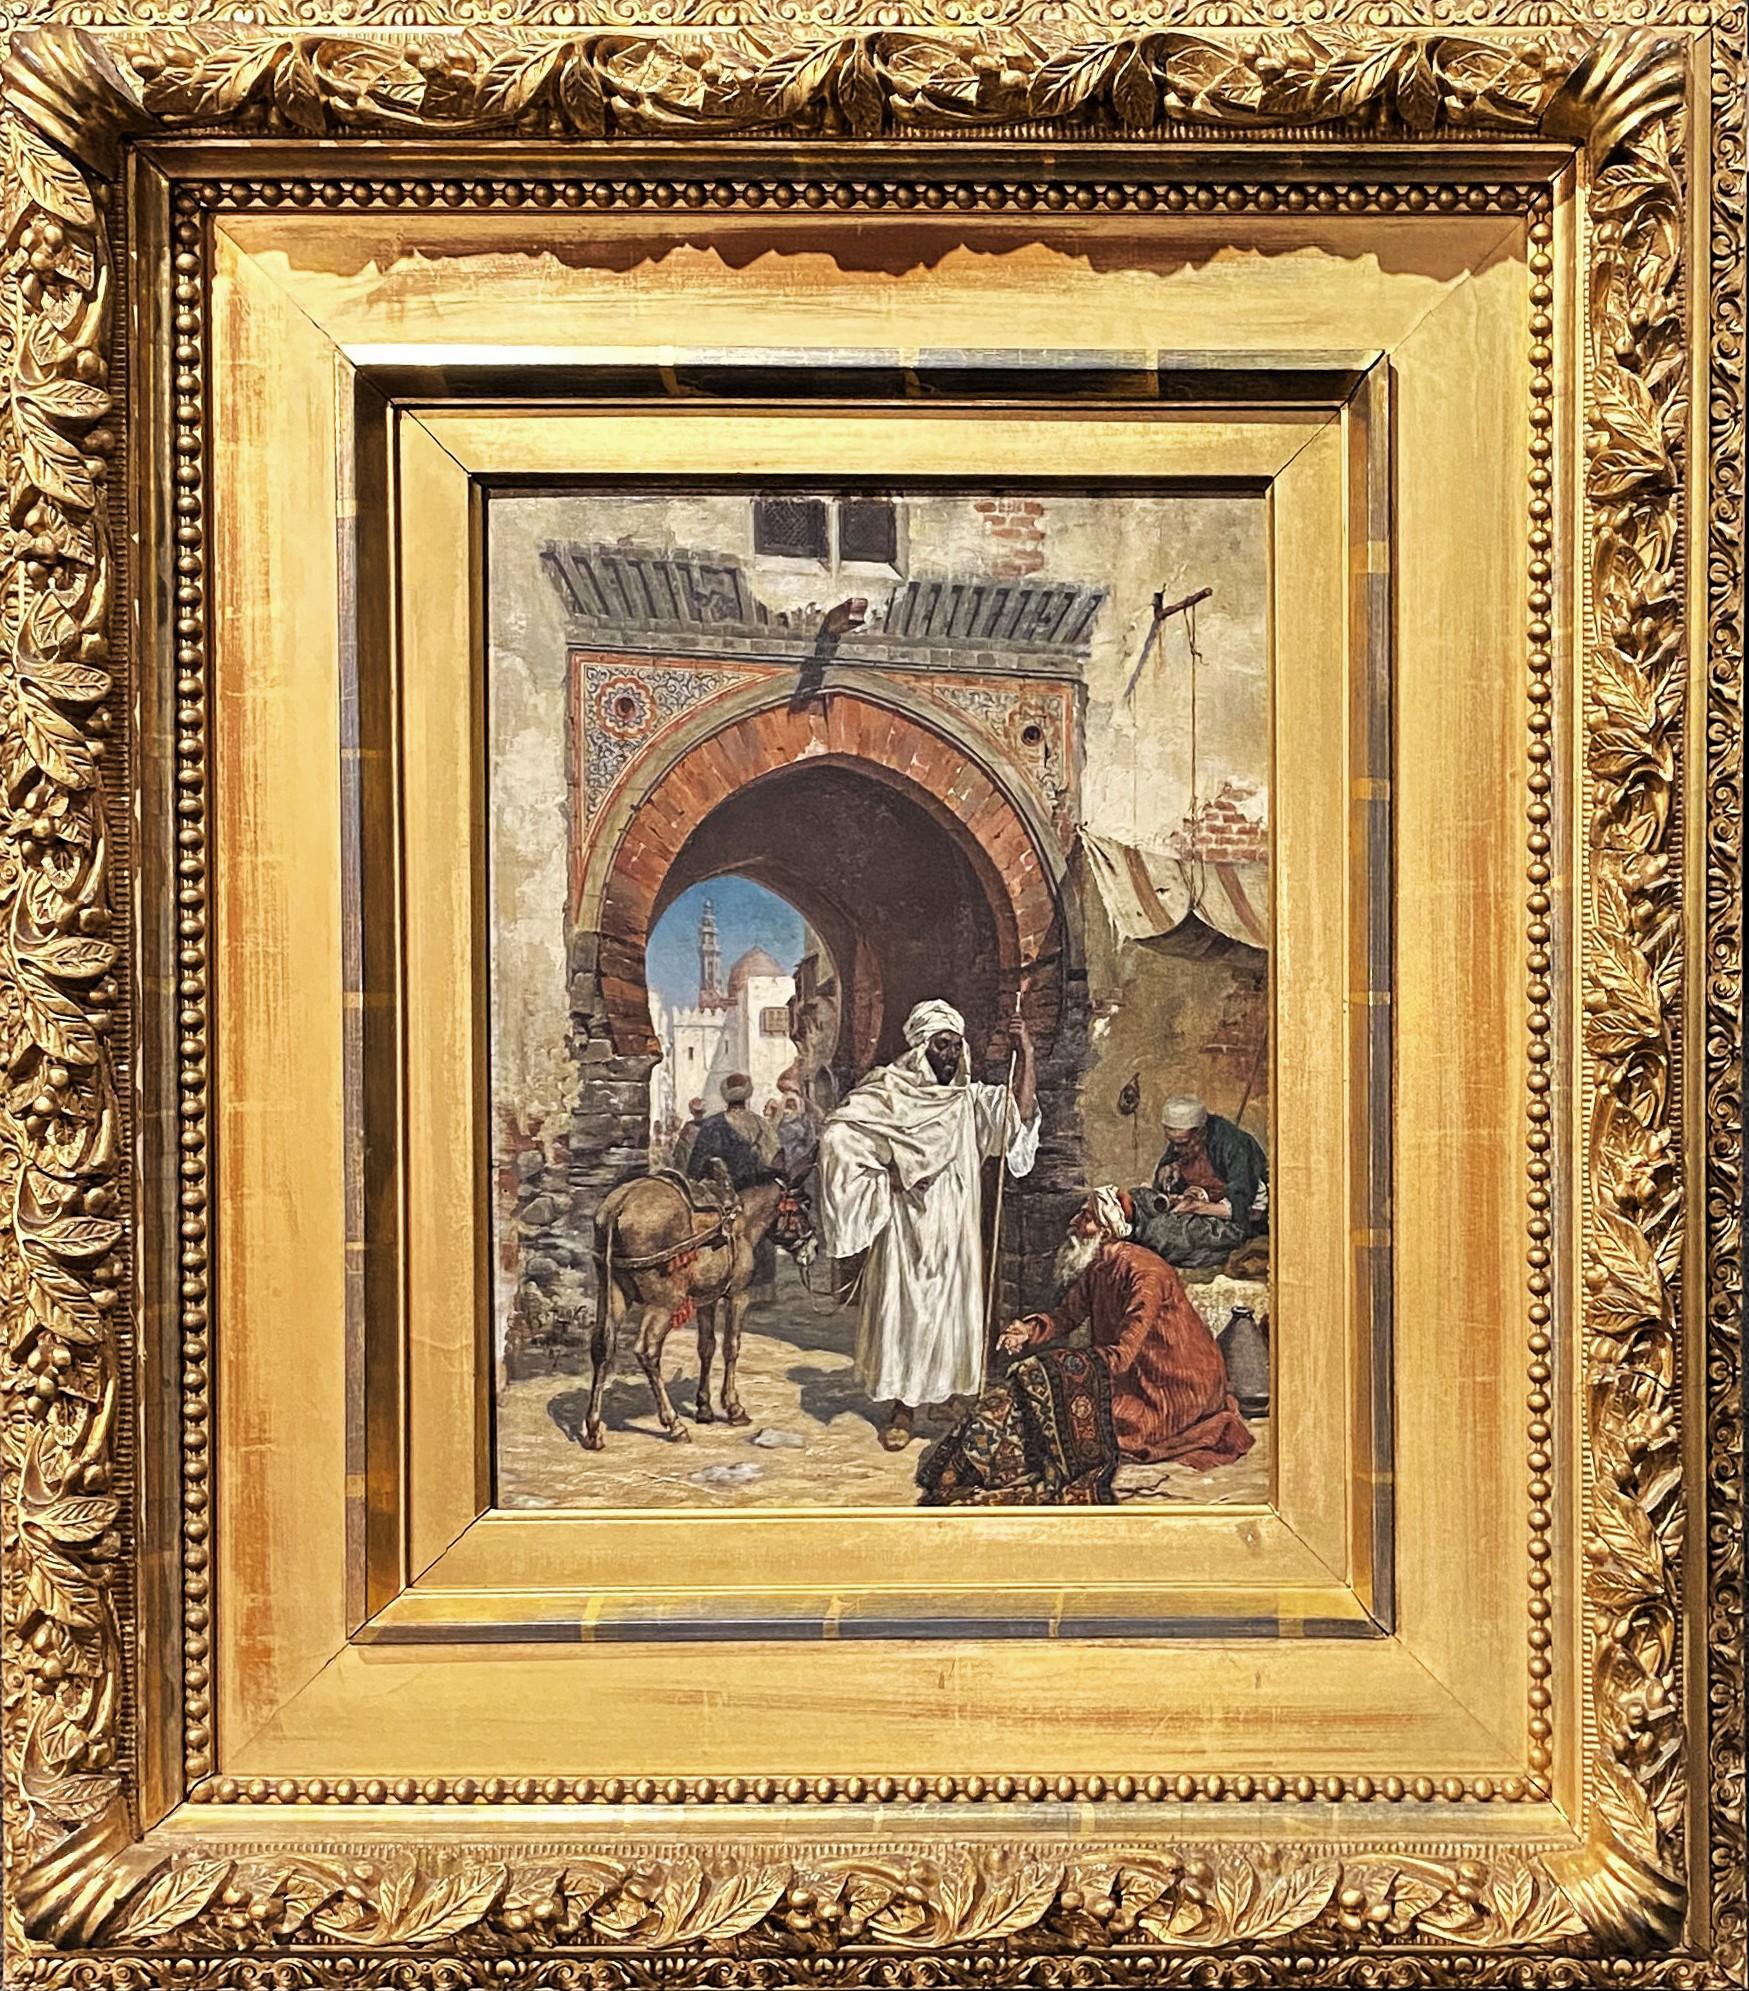 Albert Joseph Franke Figurative Painting - An Oriental Rug Merchant in a Busy Marketplace